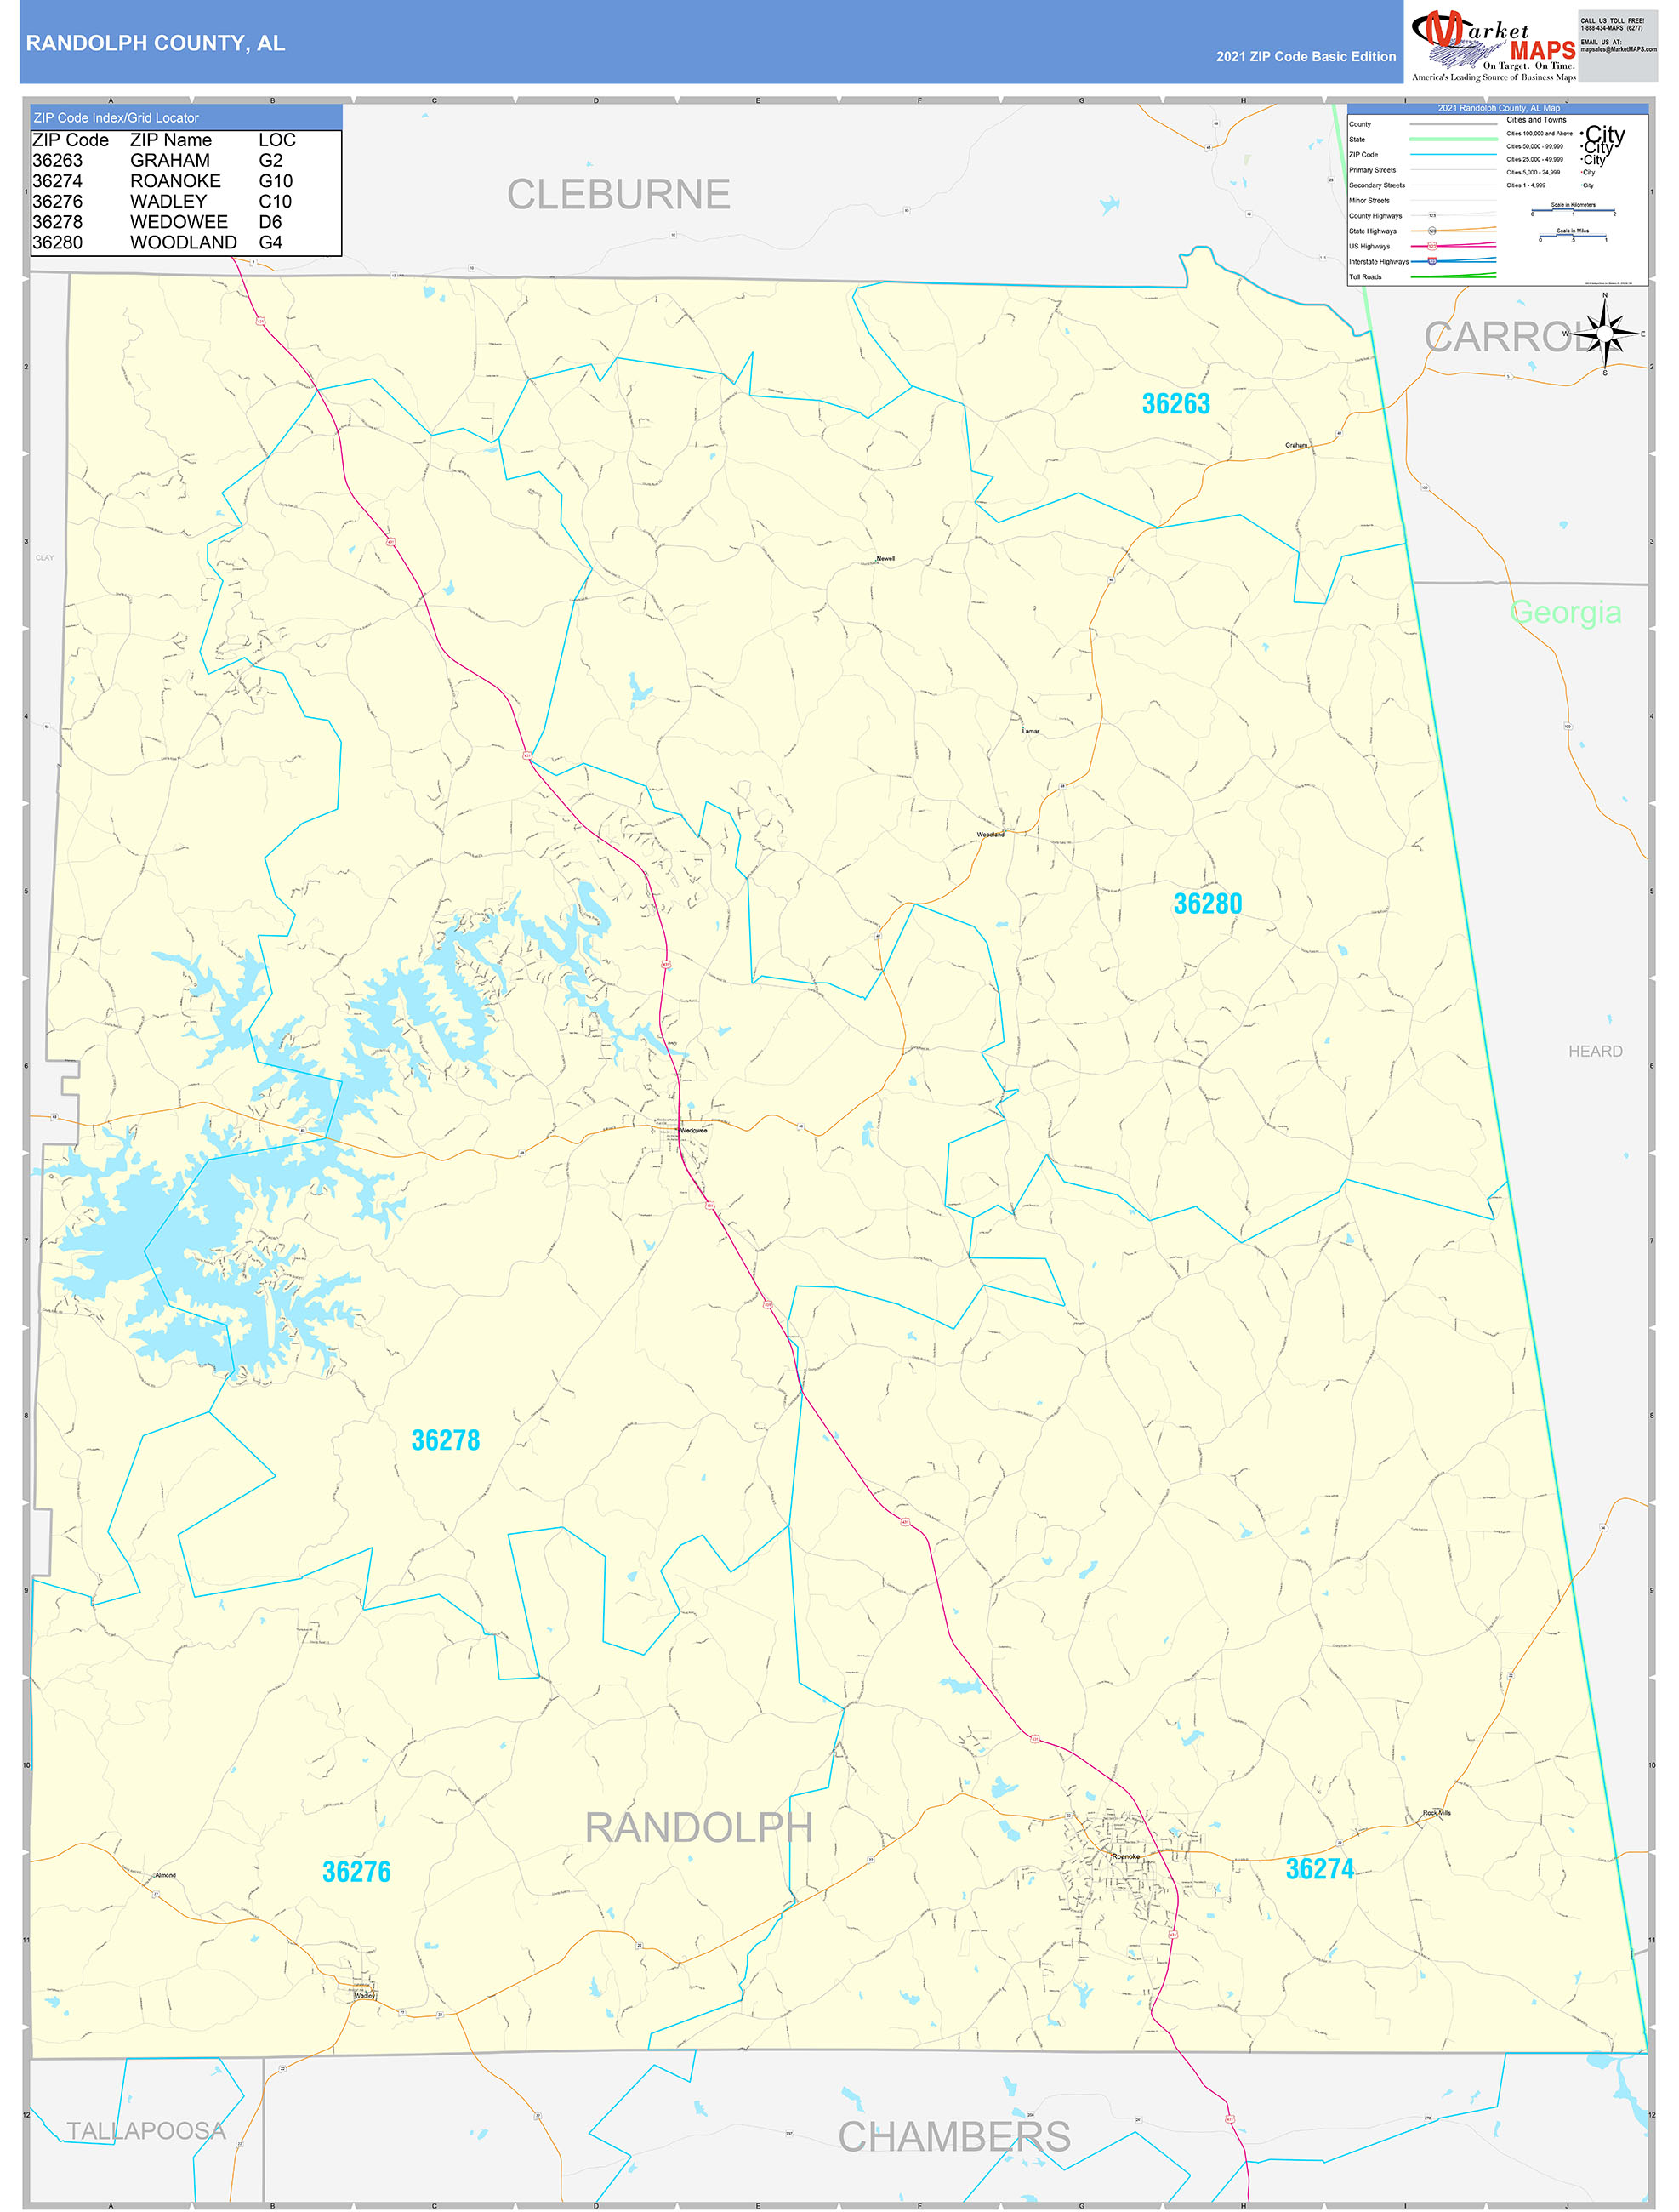 Randolph County, AL Zip Code Wall Map Basic Style by MarketMAPS - MapSales